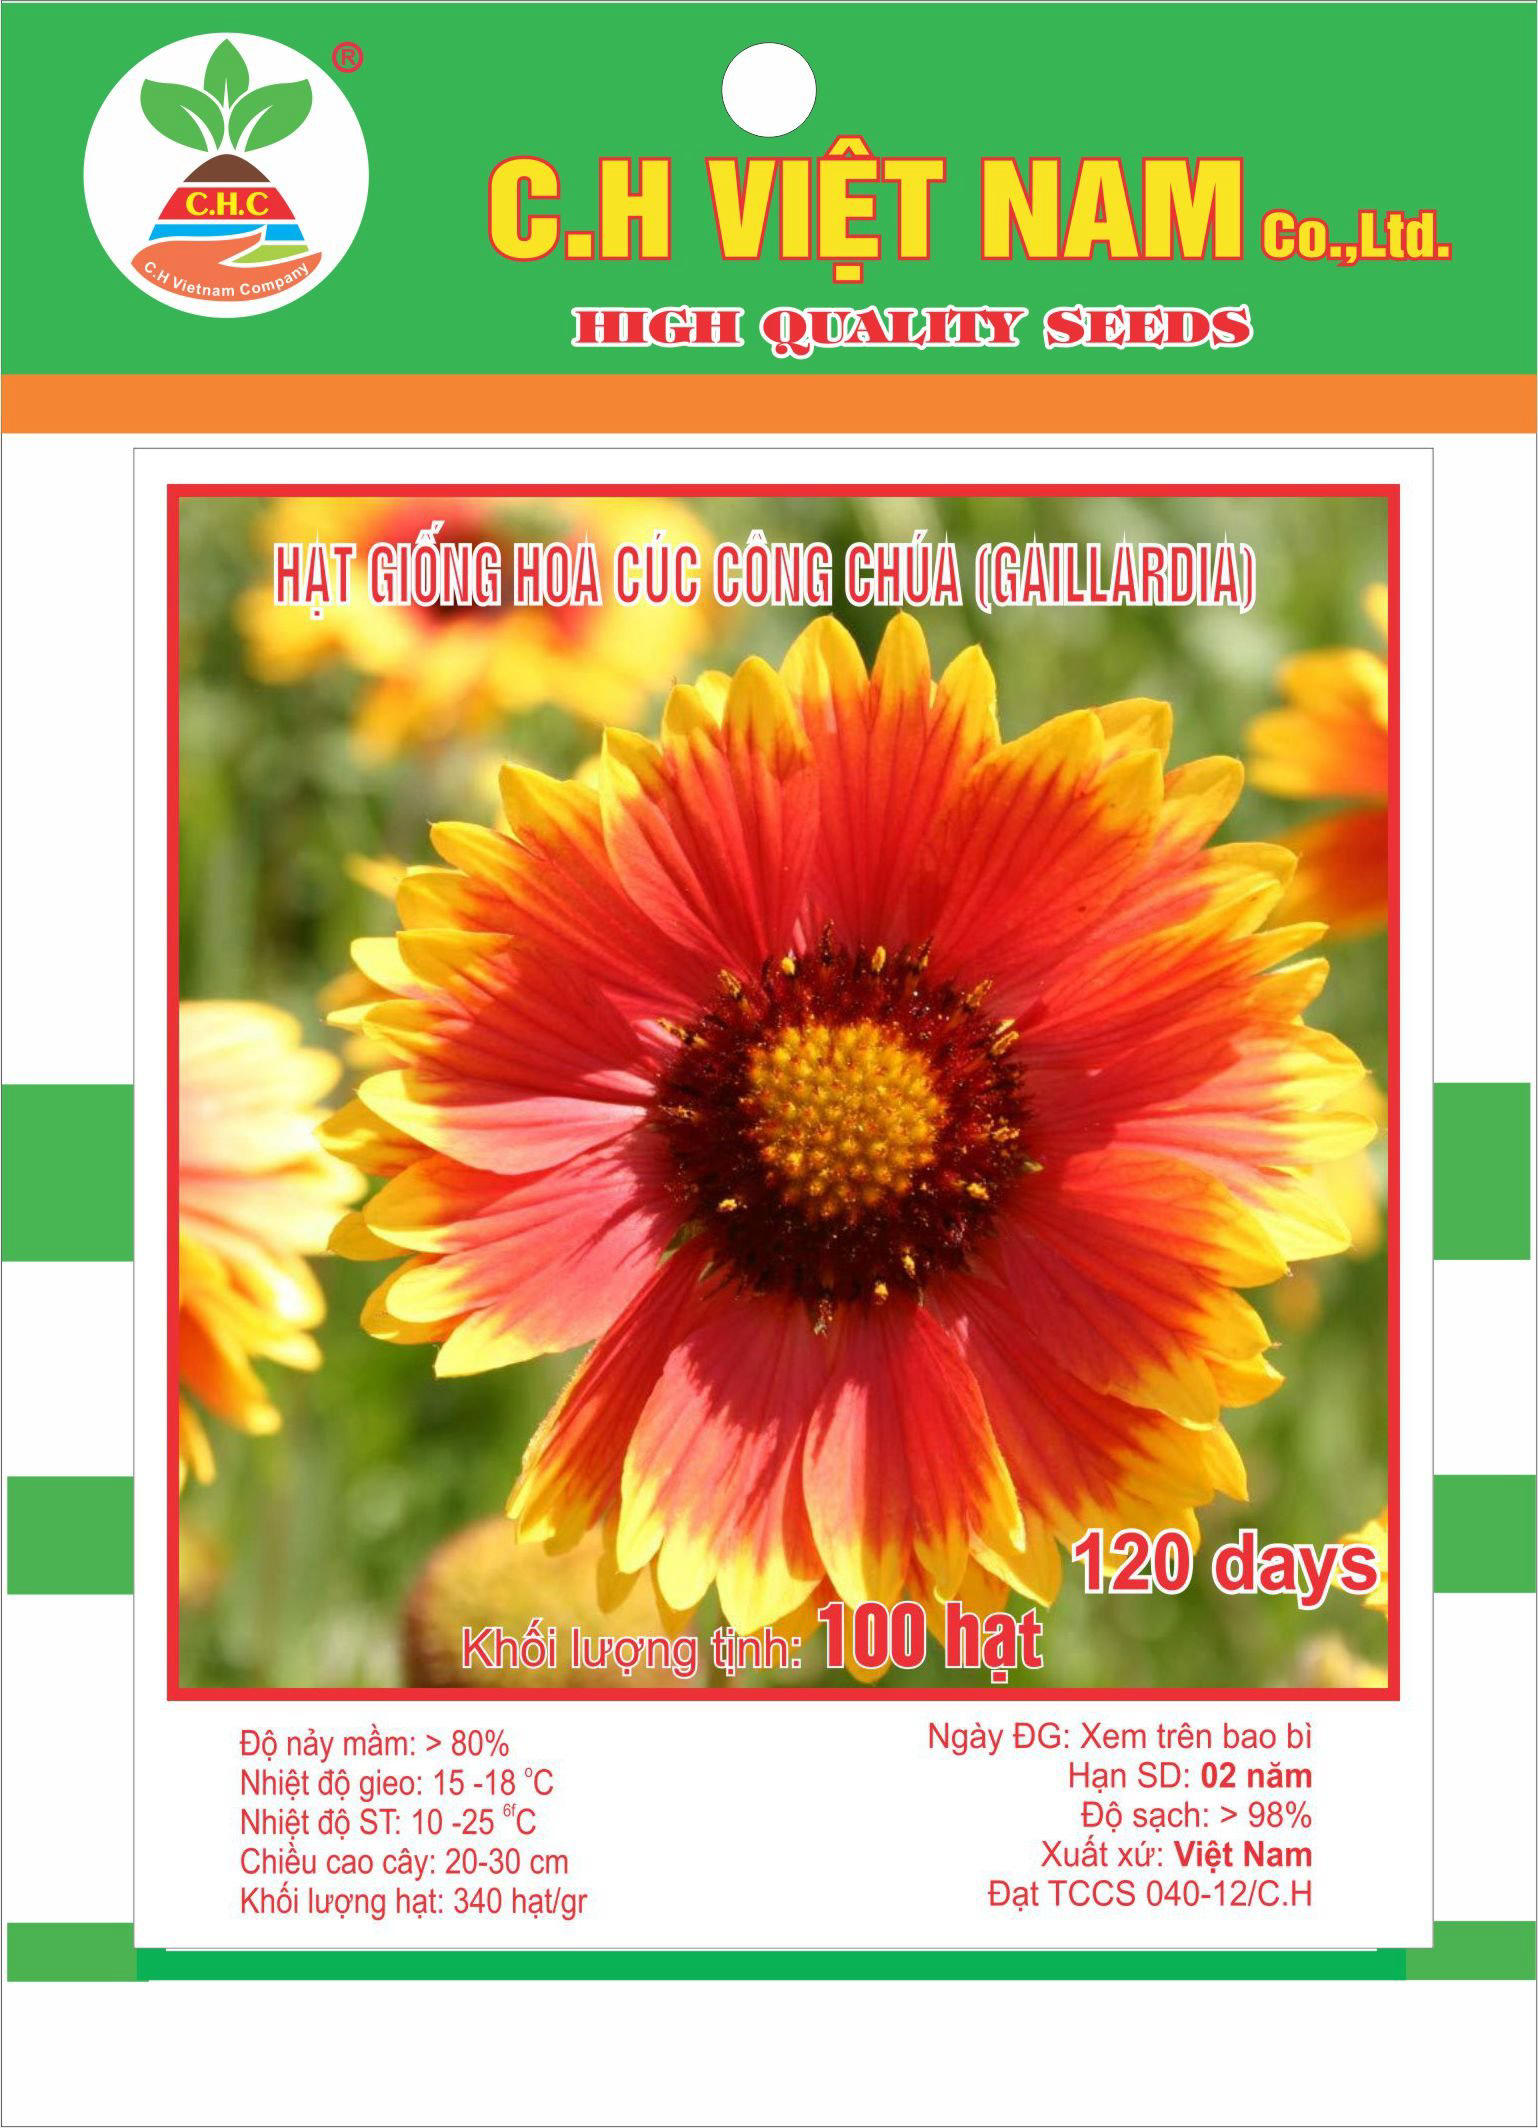 Princess chrysanthemum seeds />
                                                 		<script>
                                                            var modal = document.getElementById(